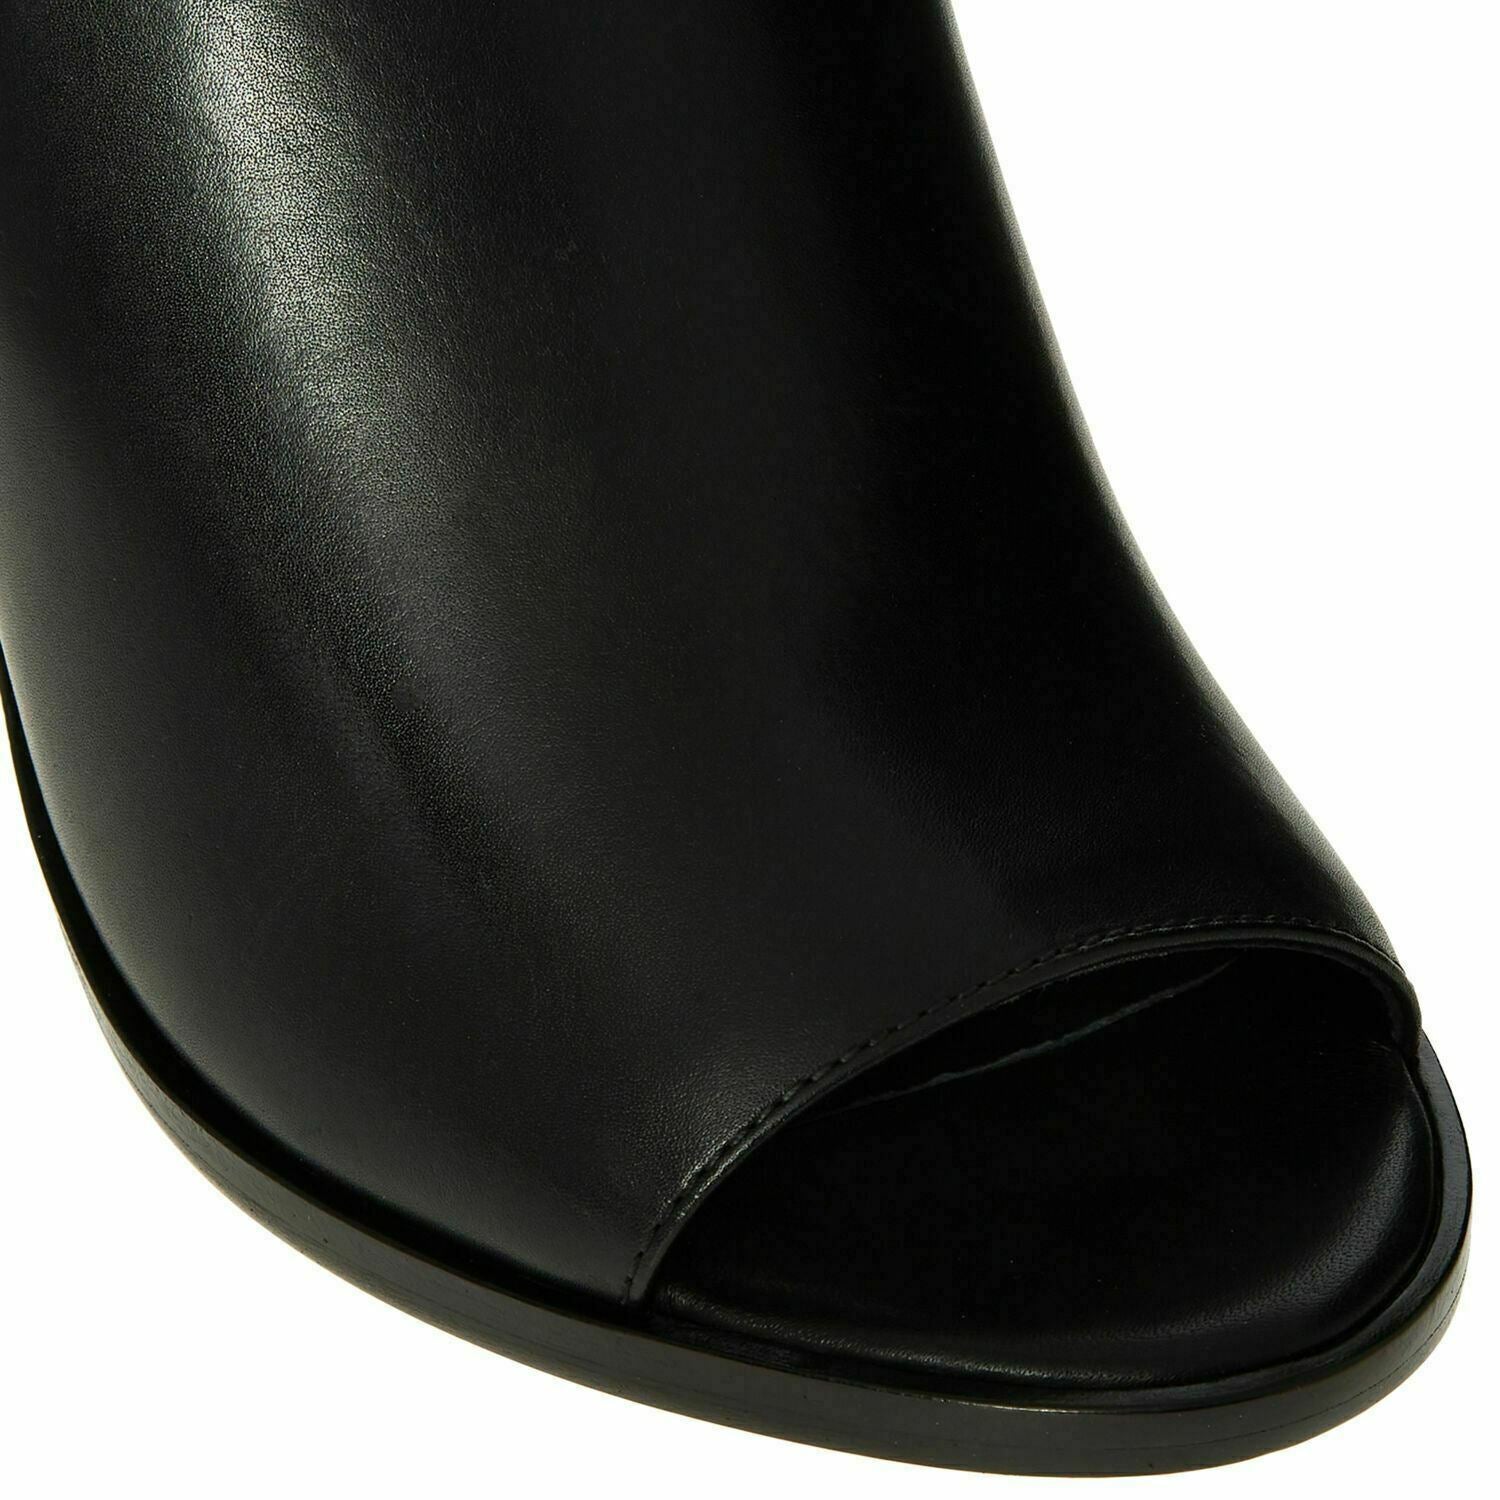 ALLSAINTS Women's POMOLA Genuine Leather Open Toe Sandals Heels, Black UK 5